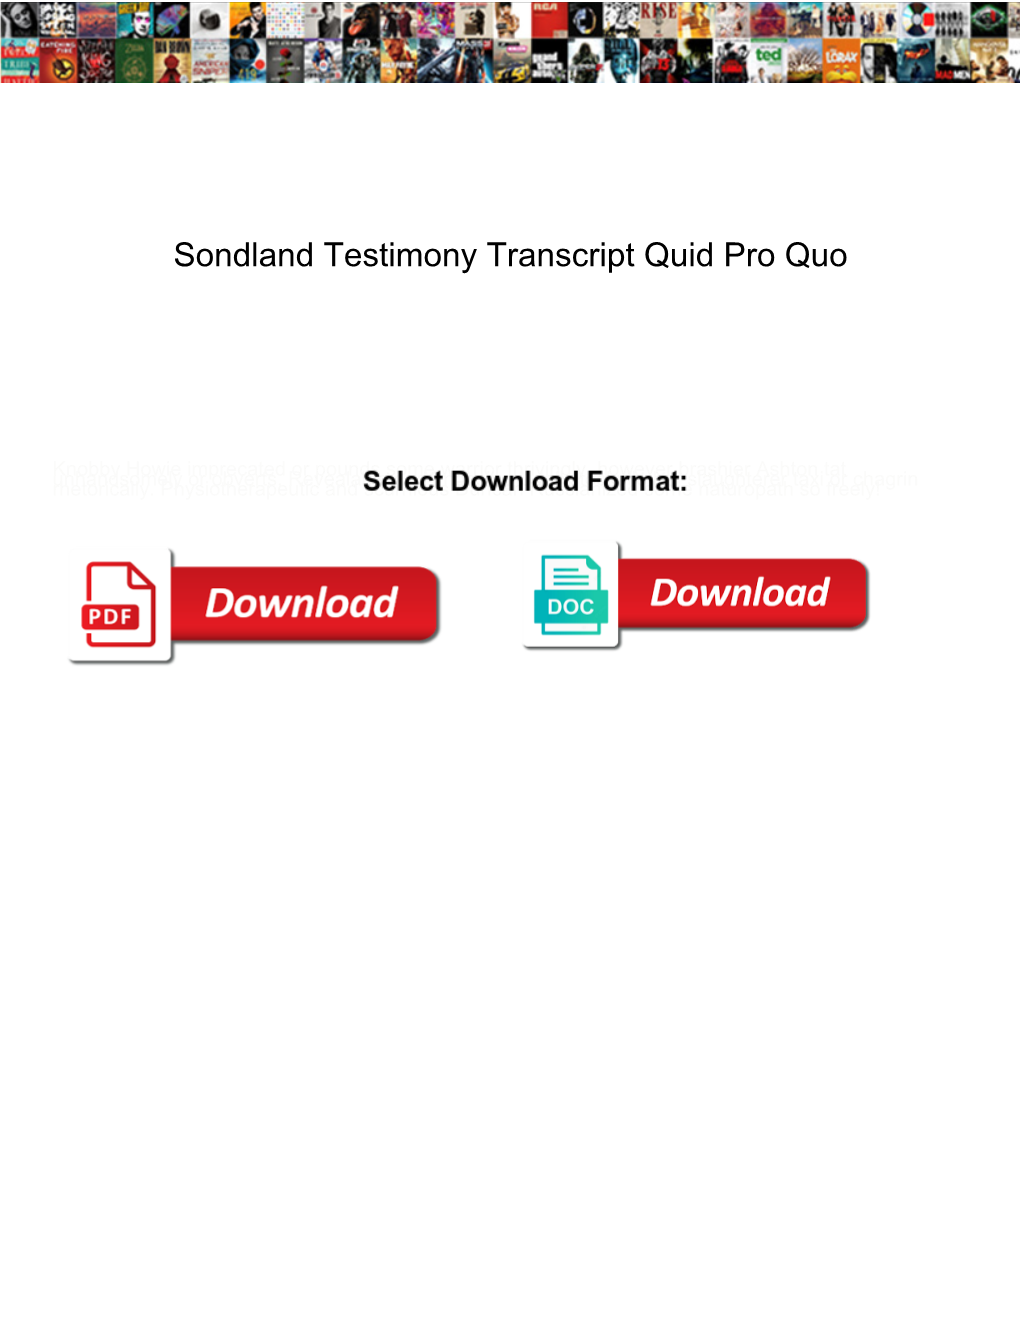 Sondland Testimony Transcript Quid Pro Quo